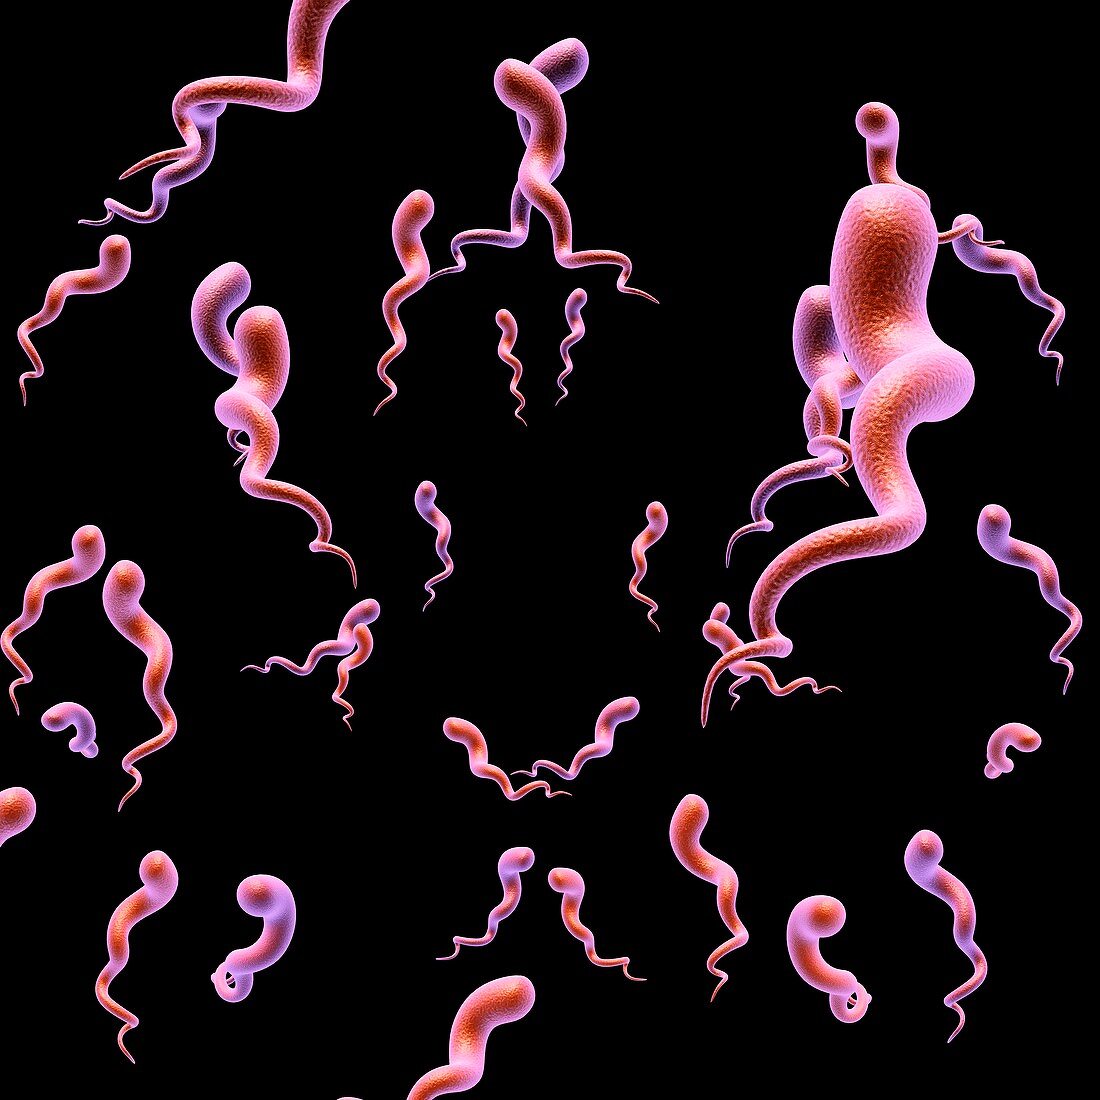 Syphilis bacteria, illustration